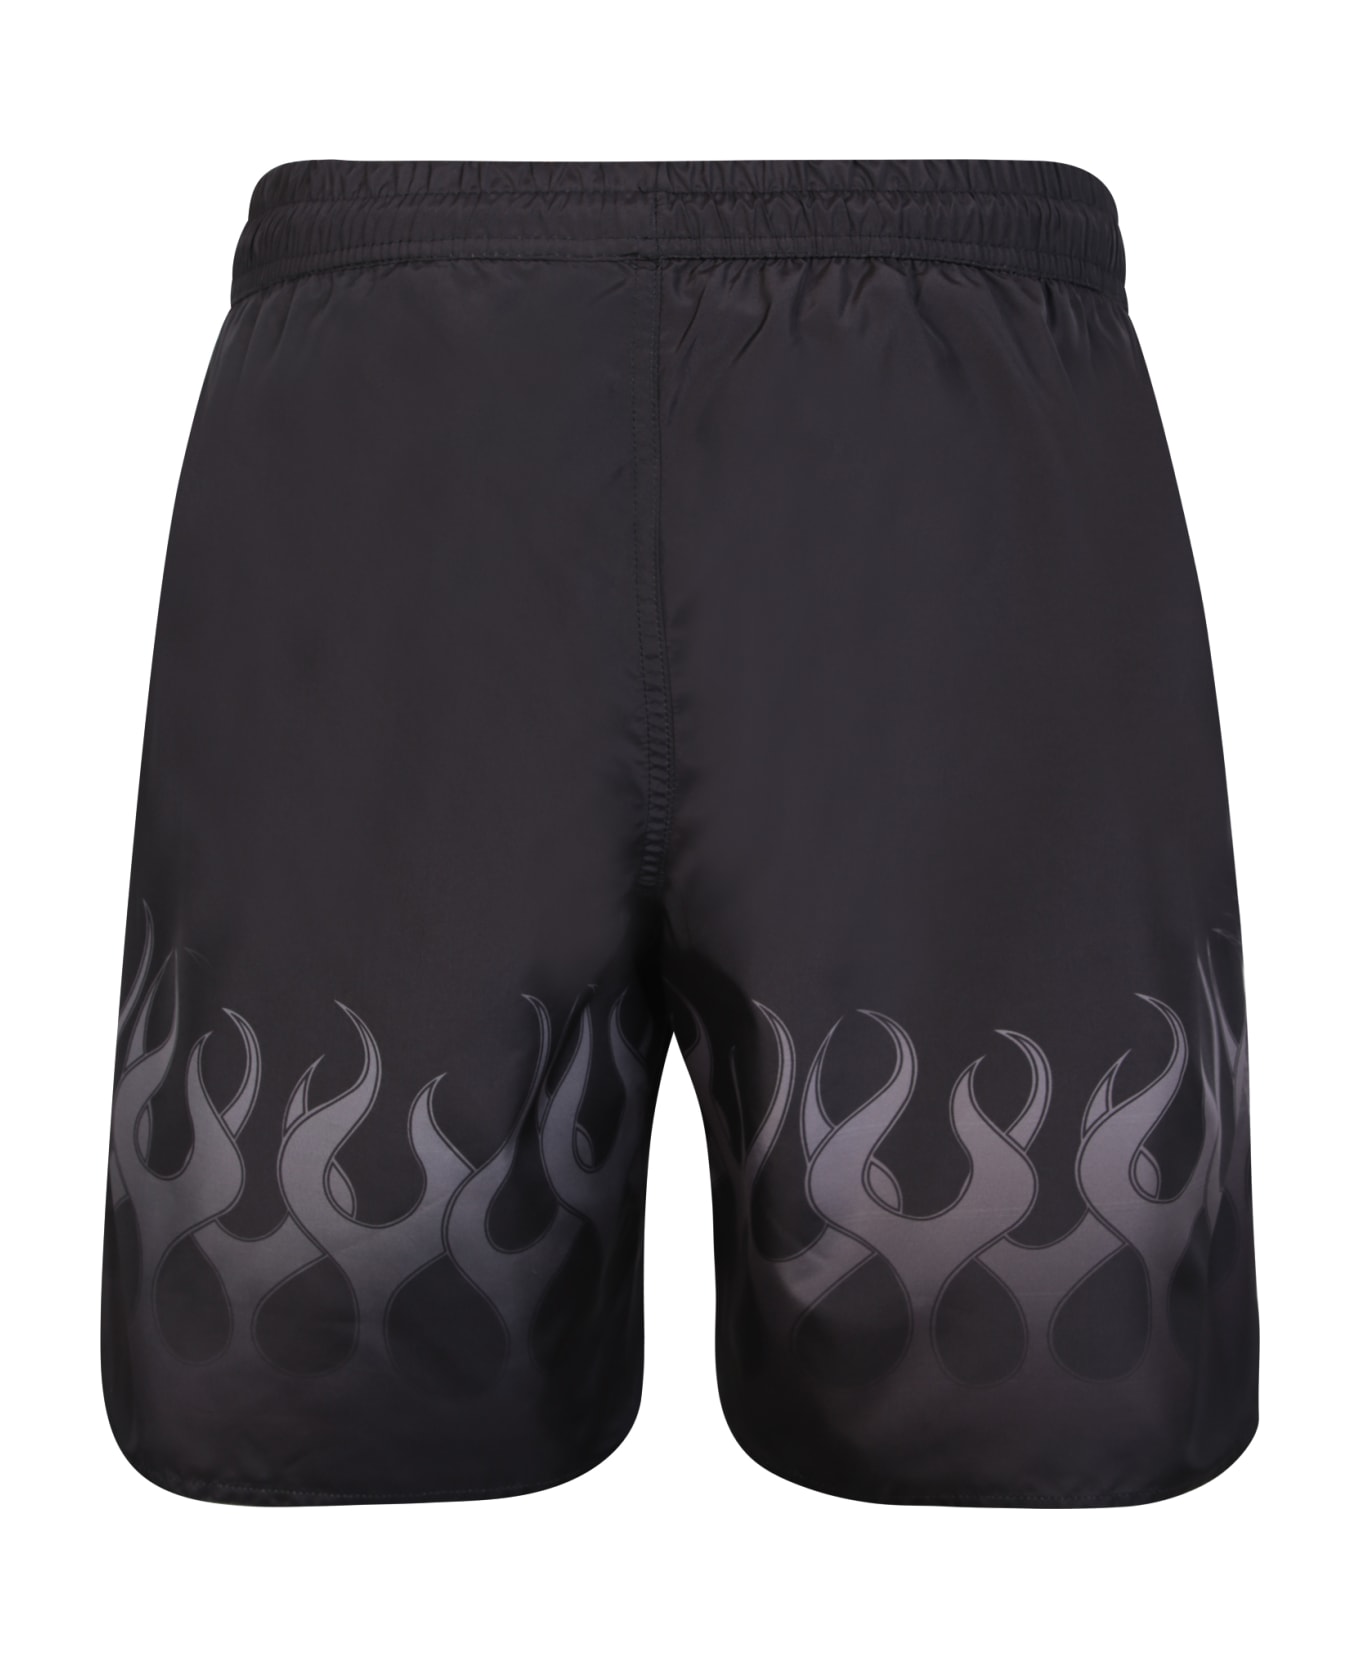 Vision of Super Black/gray Flames Swim Shorts - Black